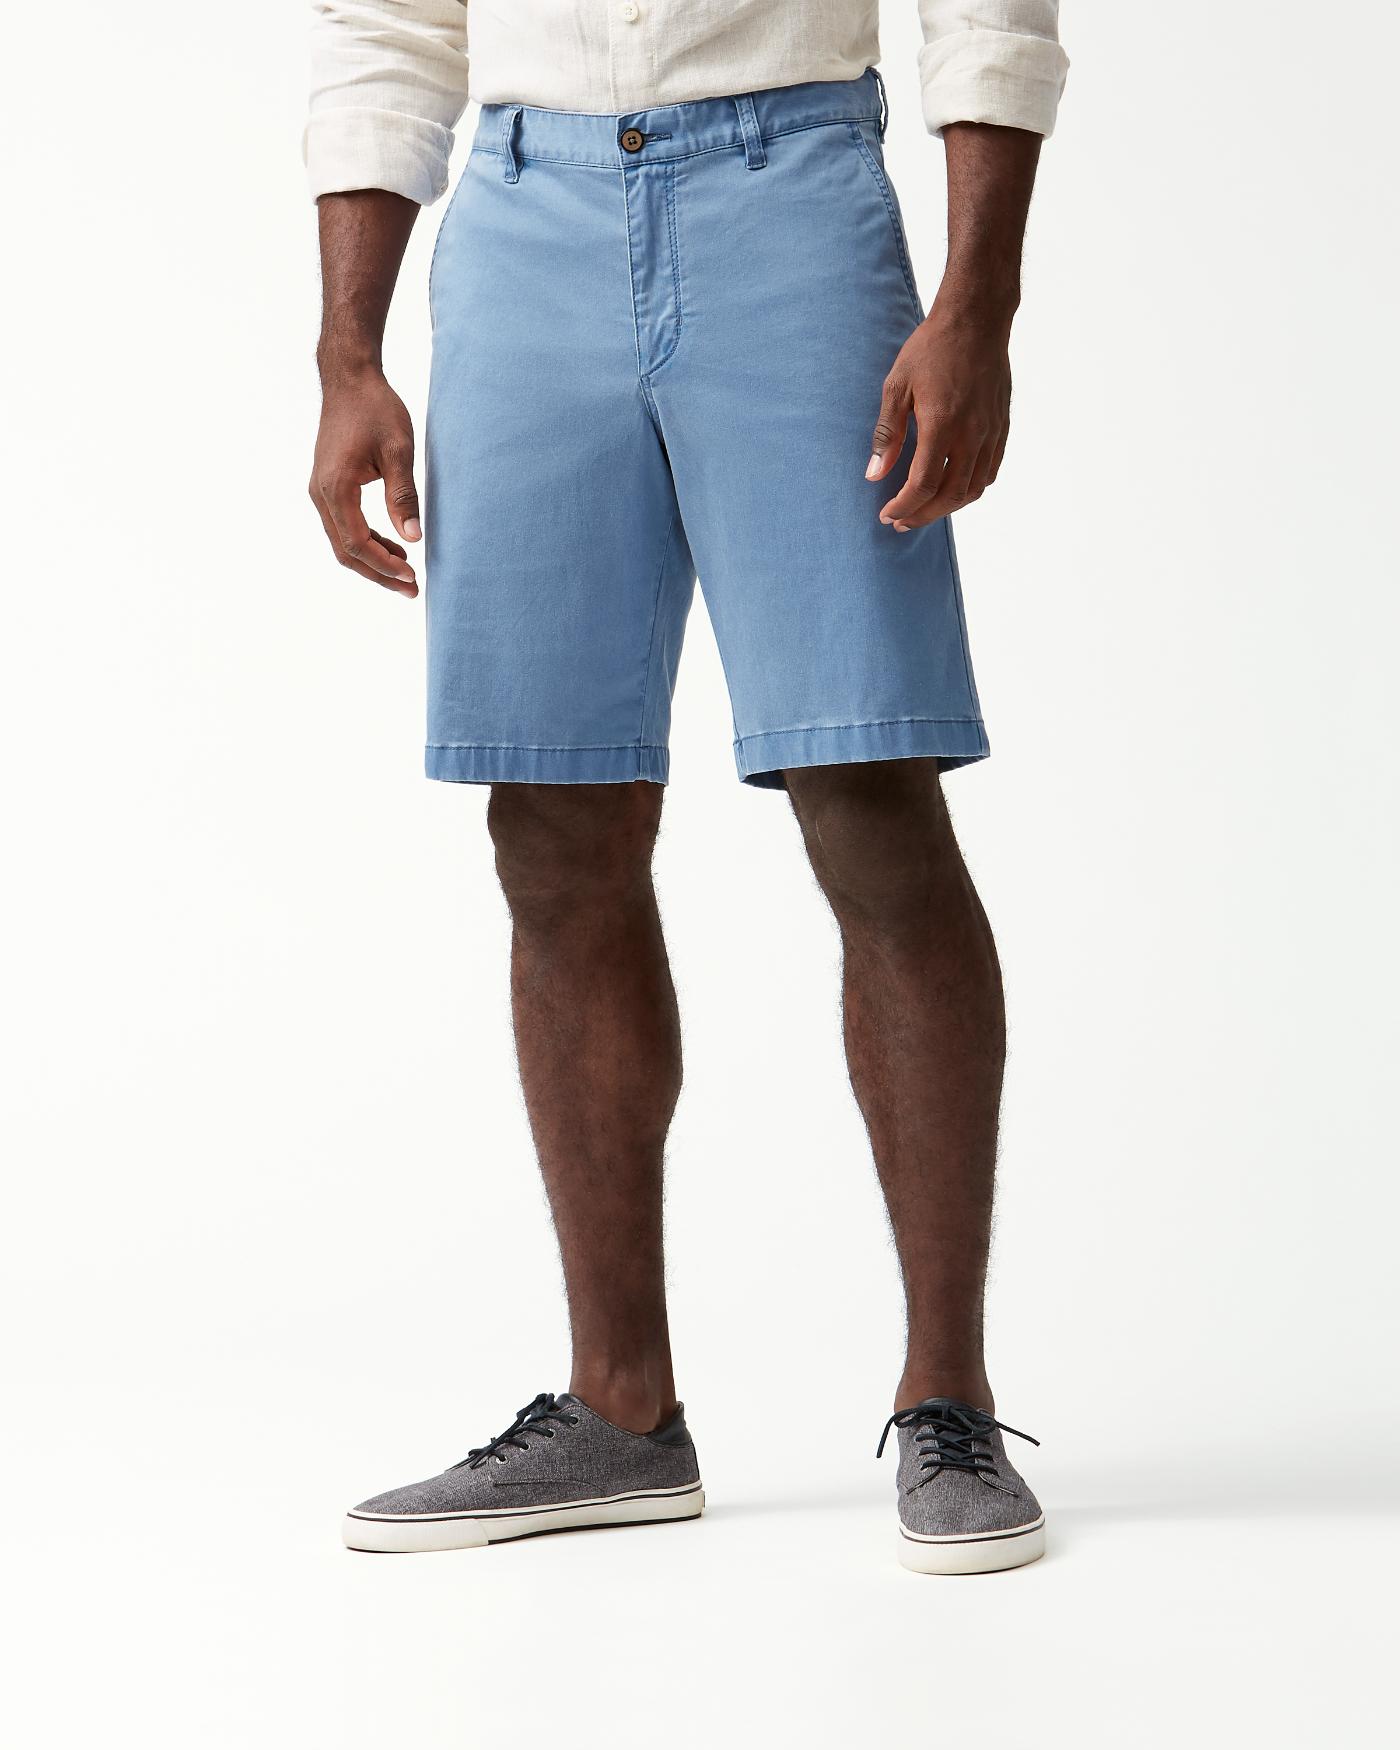 Tommy Bahama Boracay Shorts PORT SIDE BLUE 32  3242988.41